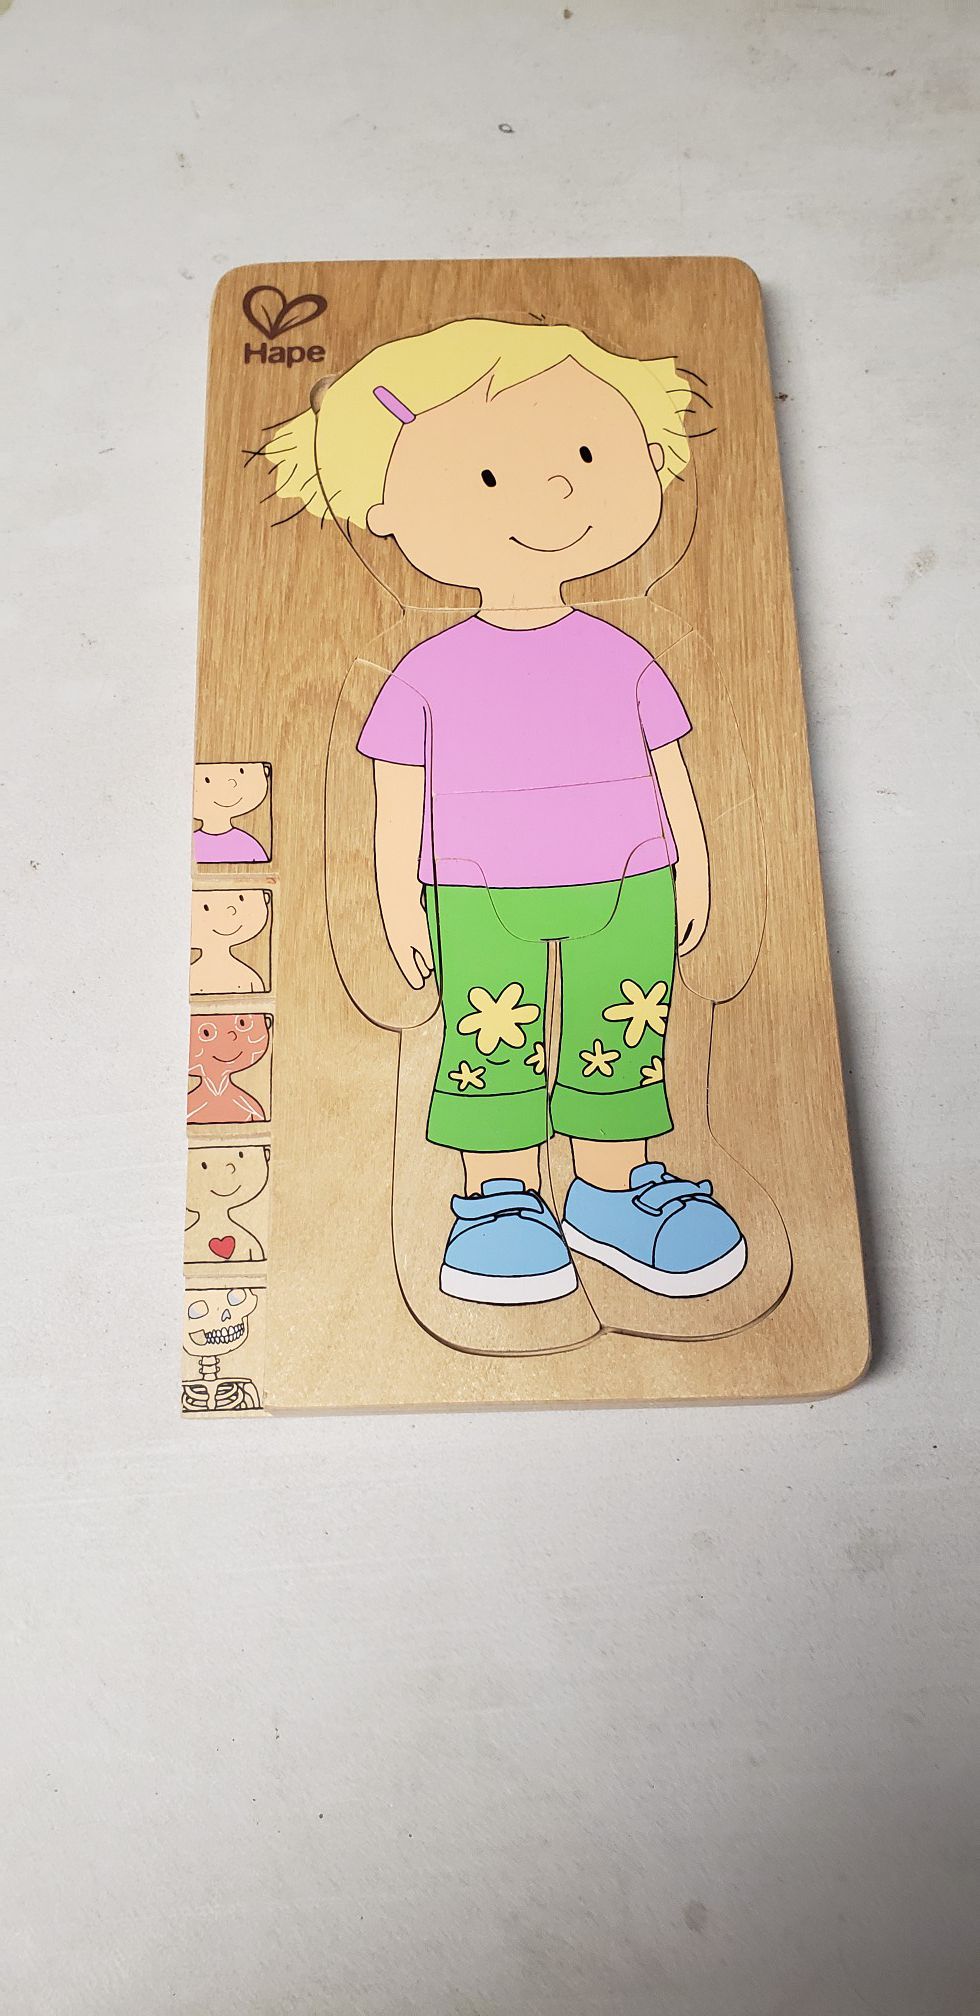 Hape wooden puzzle girl